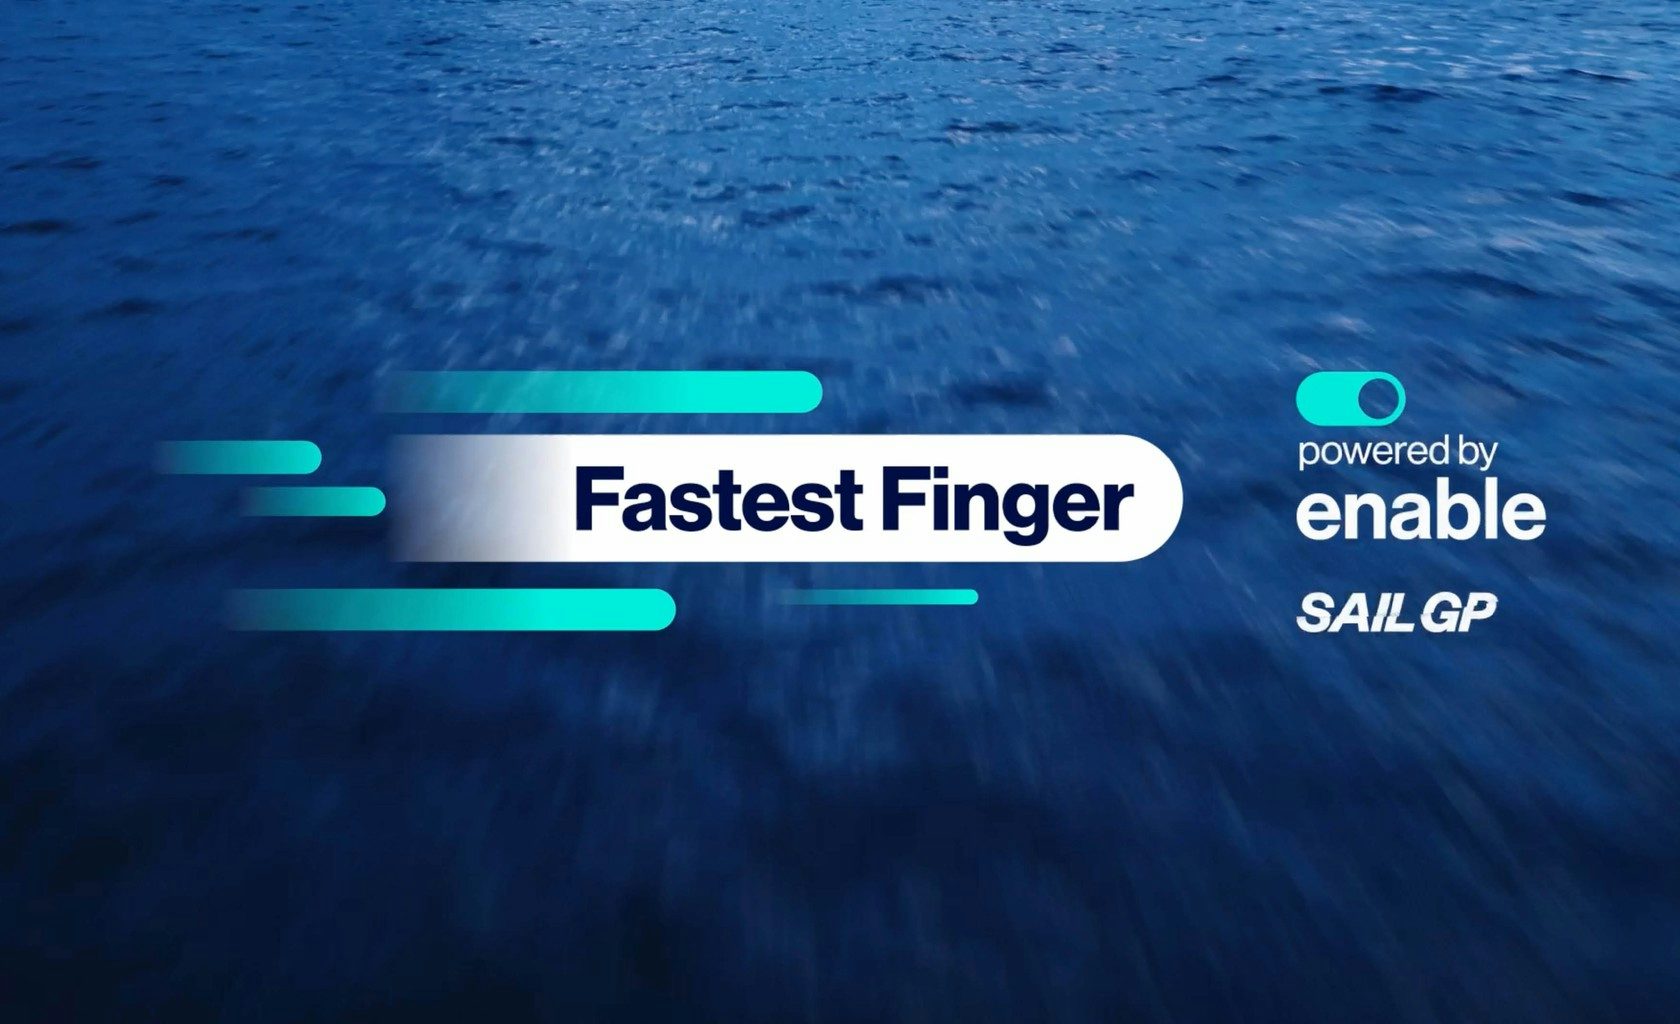 fastest-finger-brand-identity-case-study-02-video-still